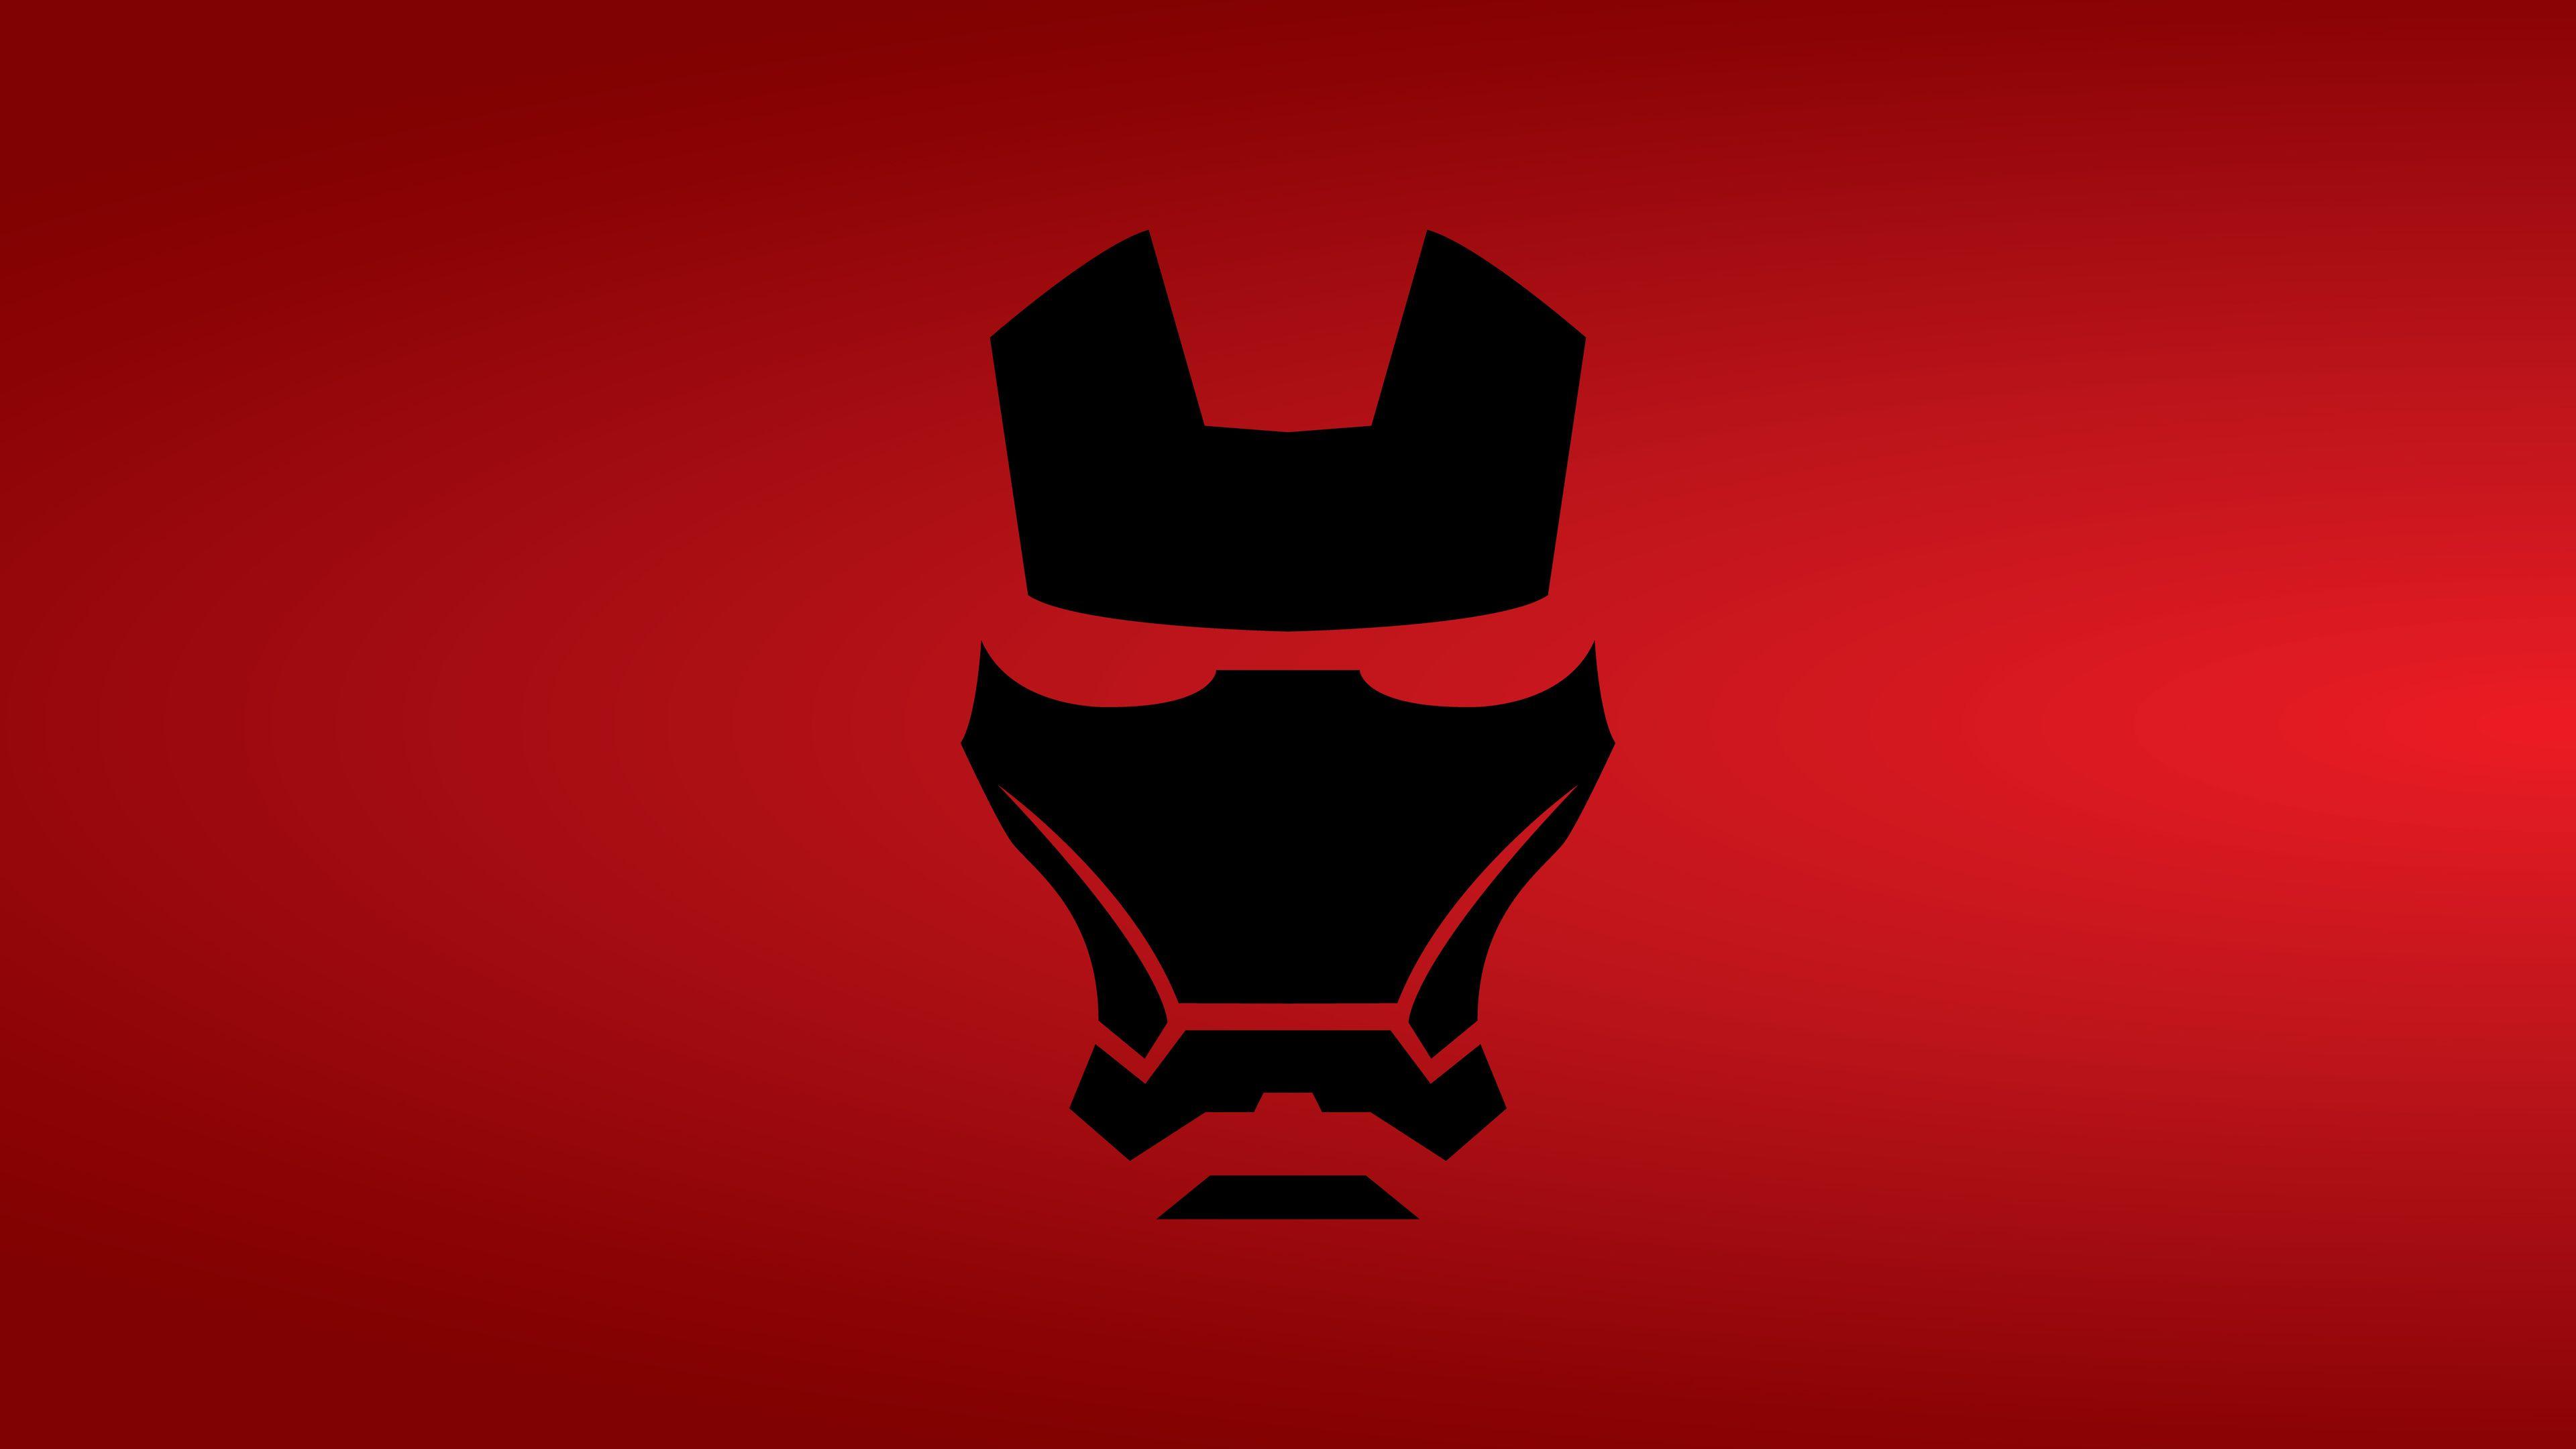 Iron Man Mask Minimalist 4k superheroes wallpaper, red